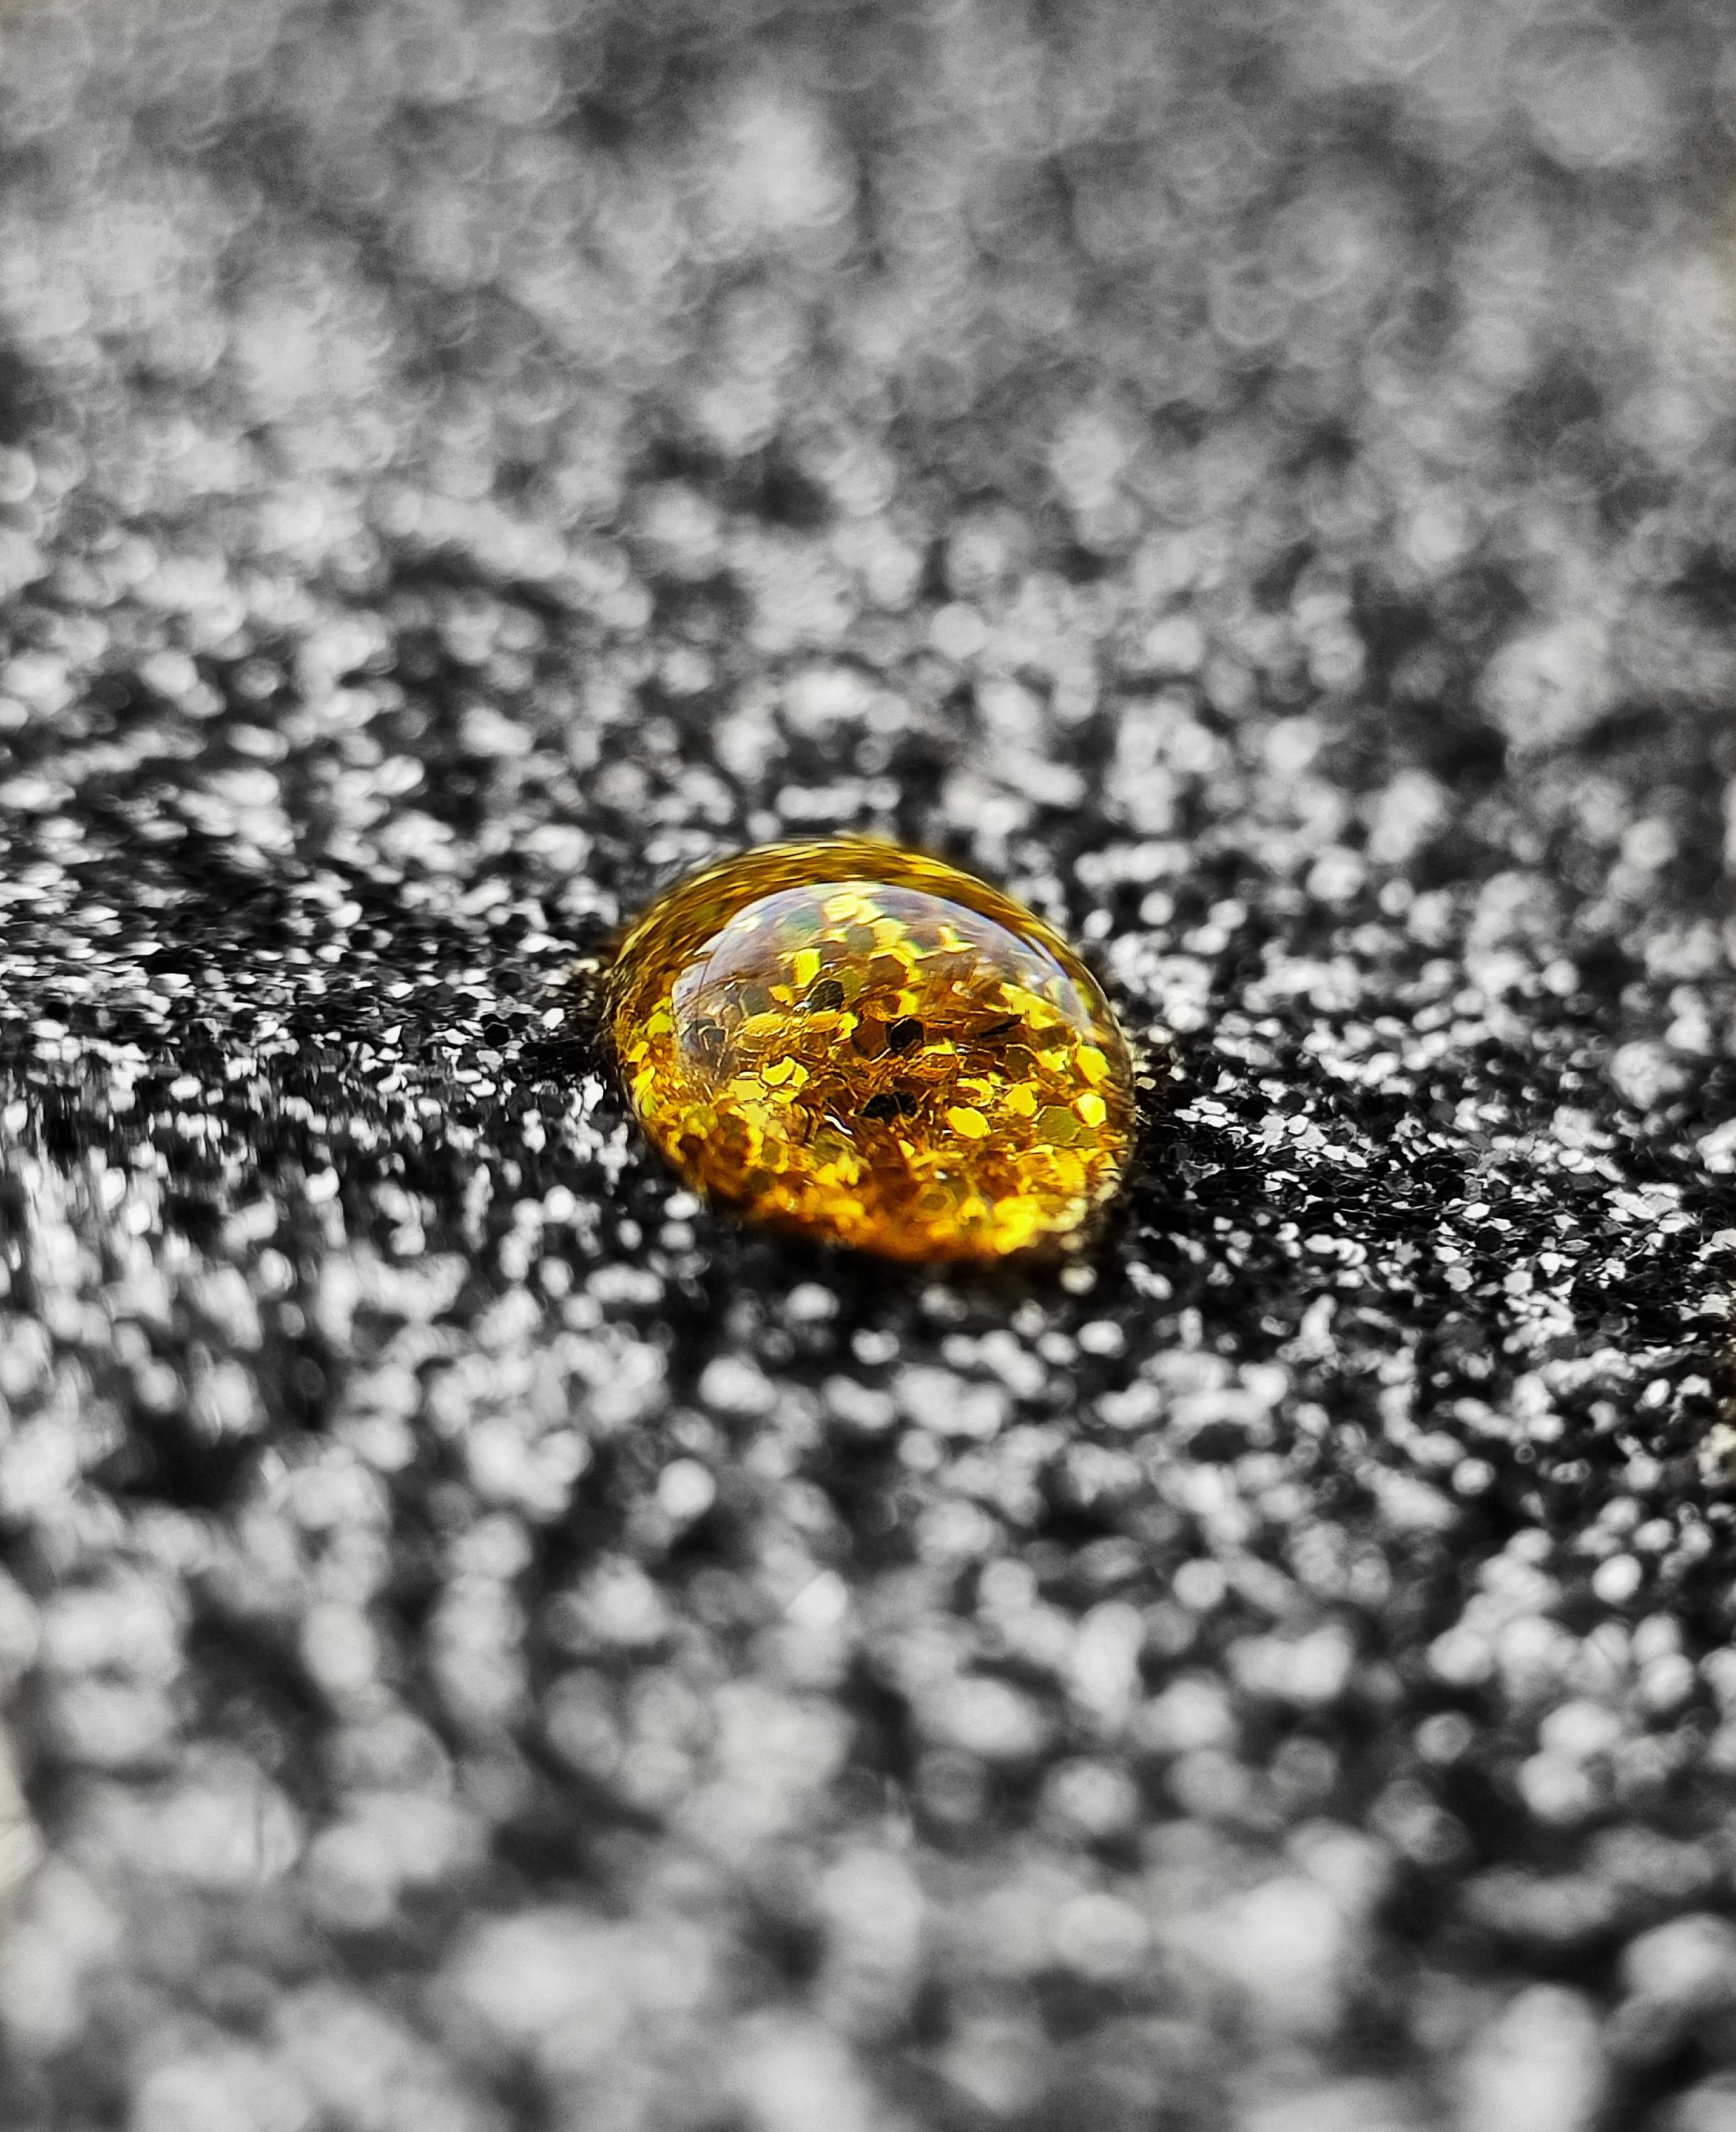 A golden drop of water